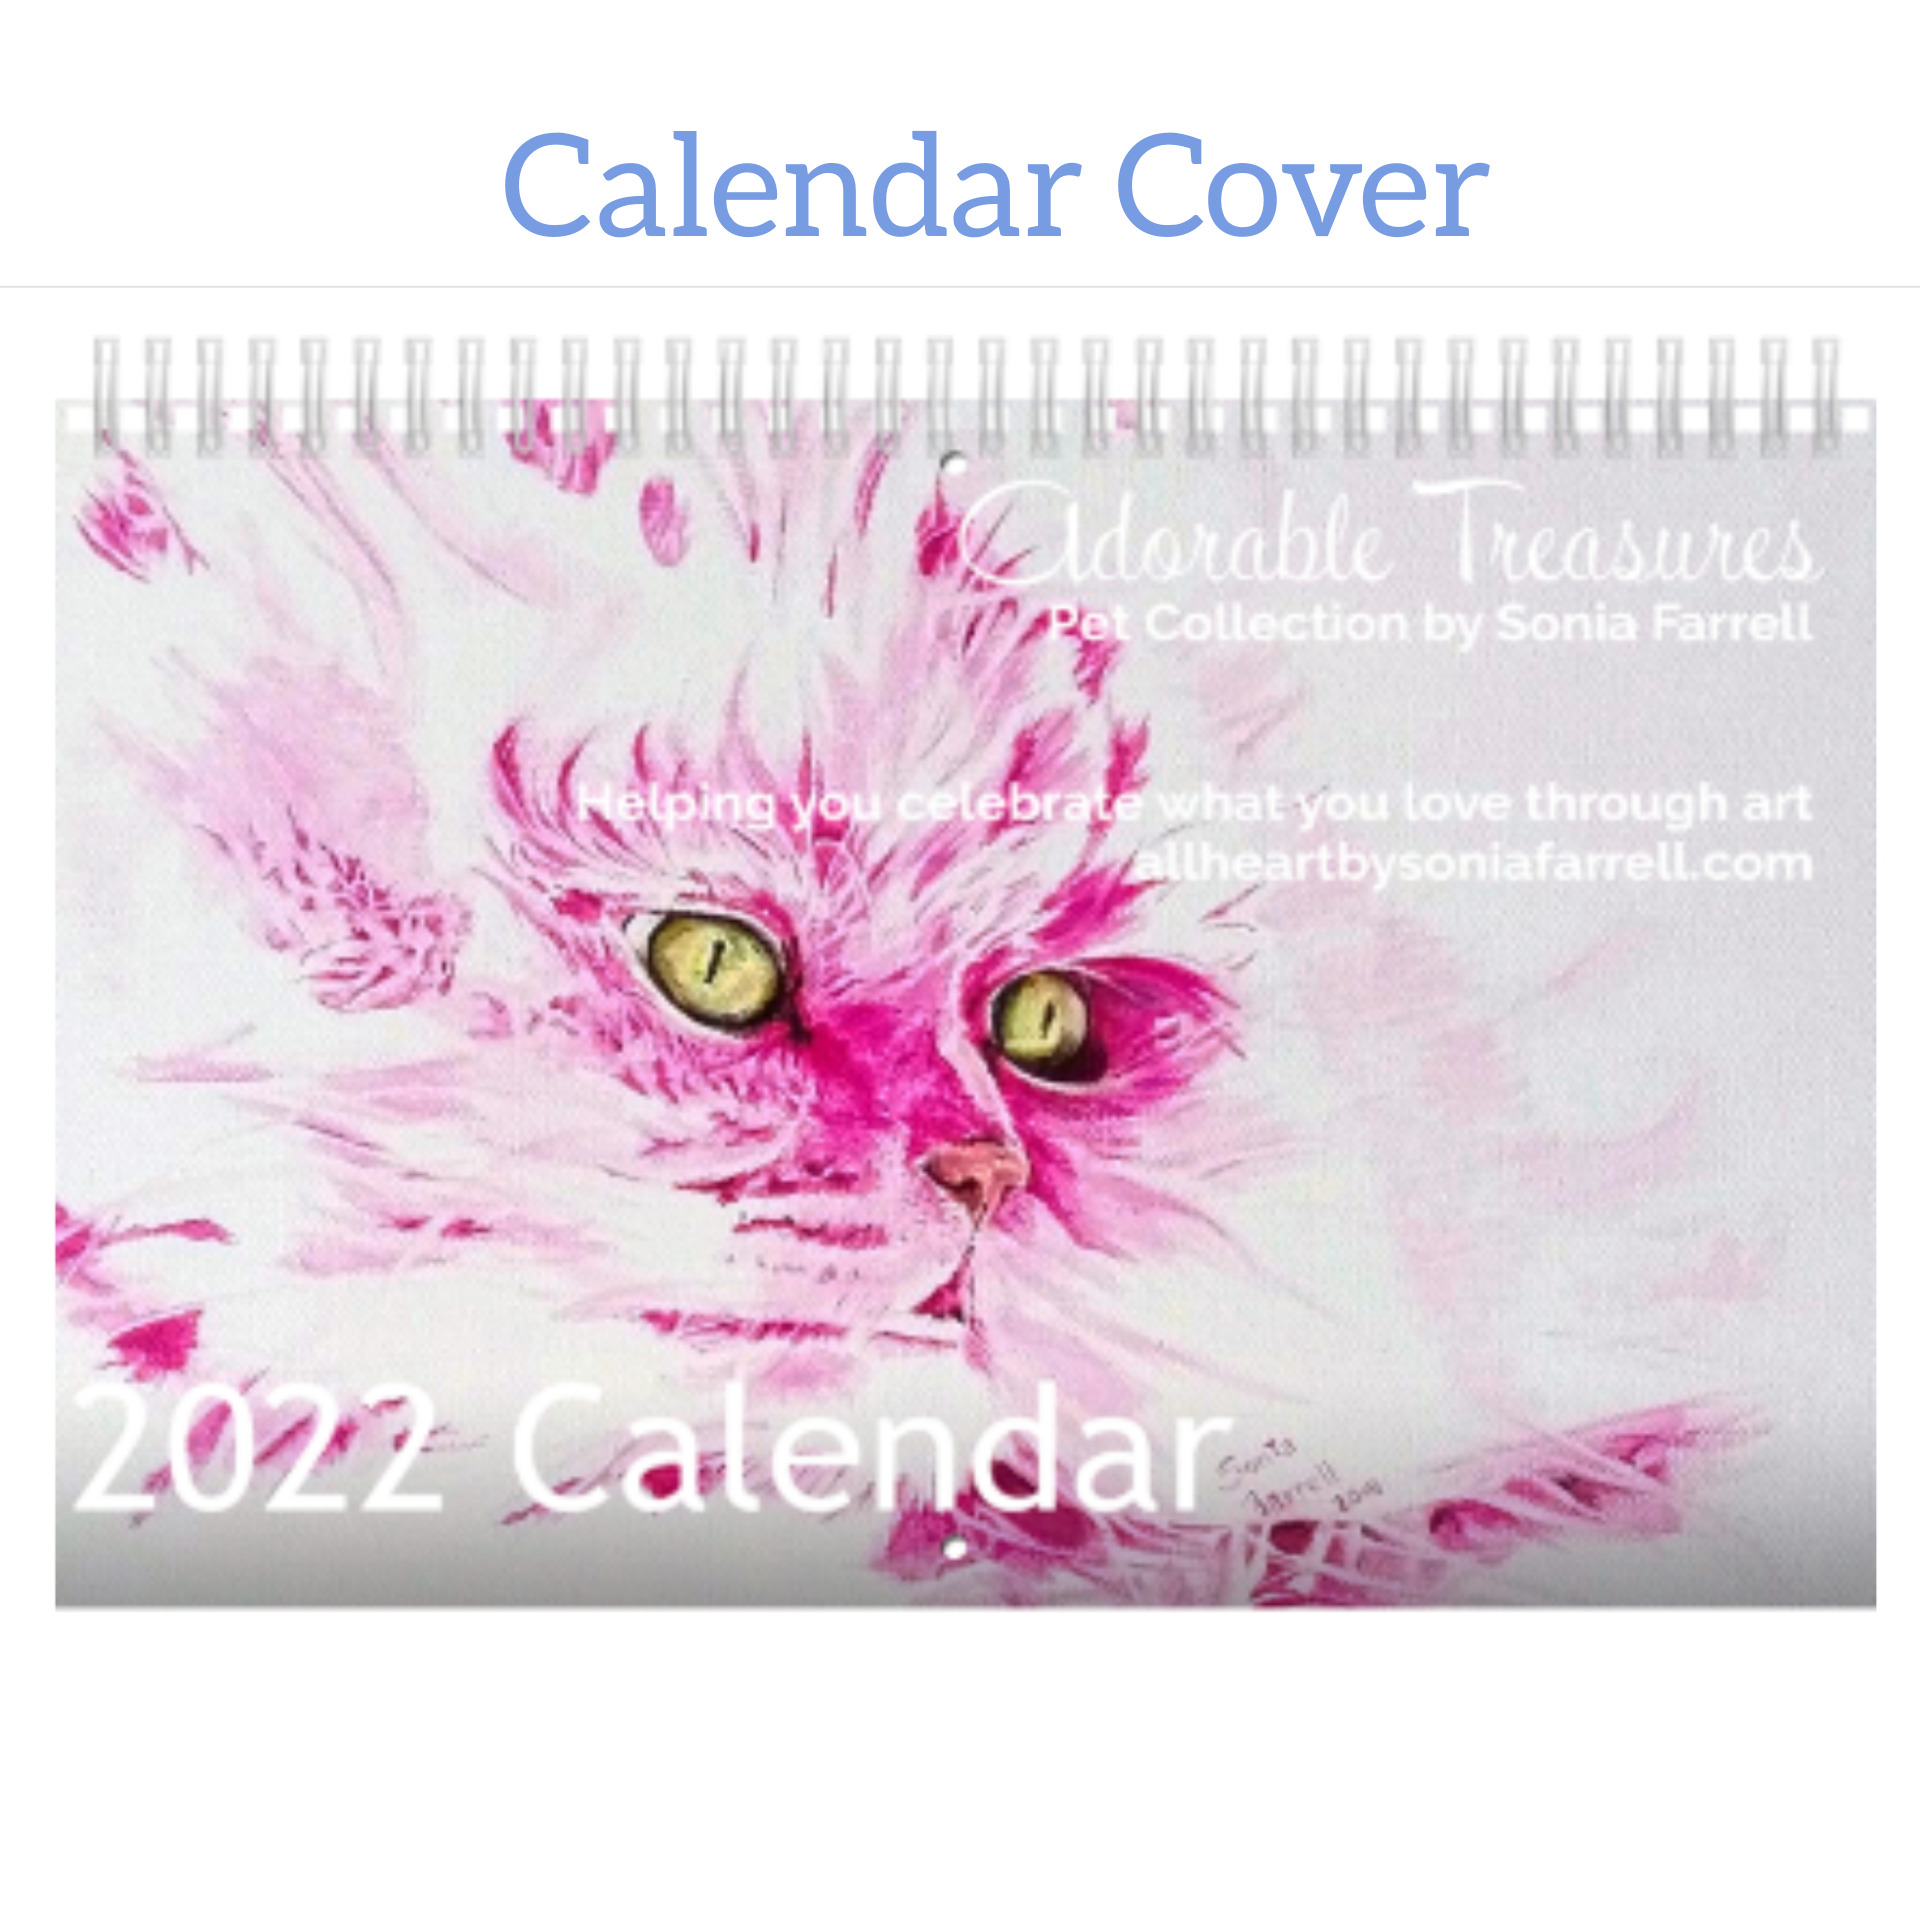 2022 adorable treasures calendar cover bkz9cb